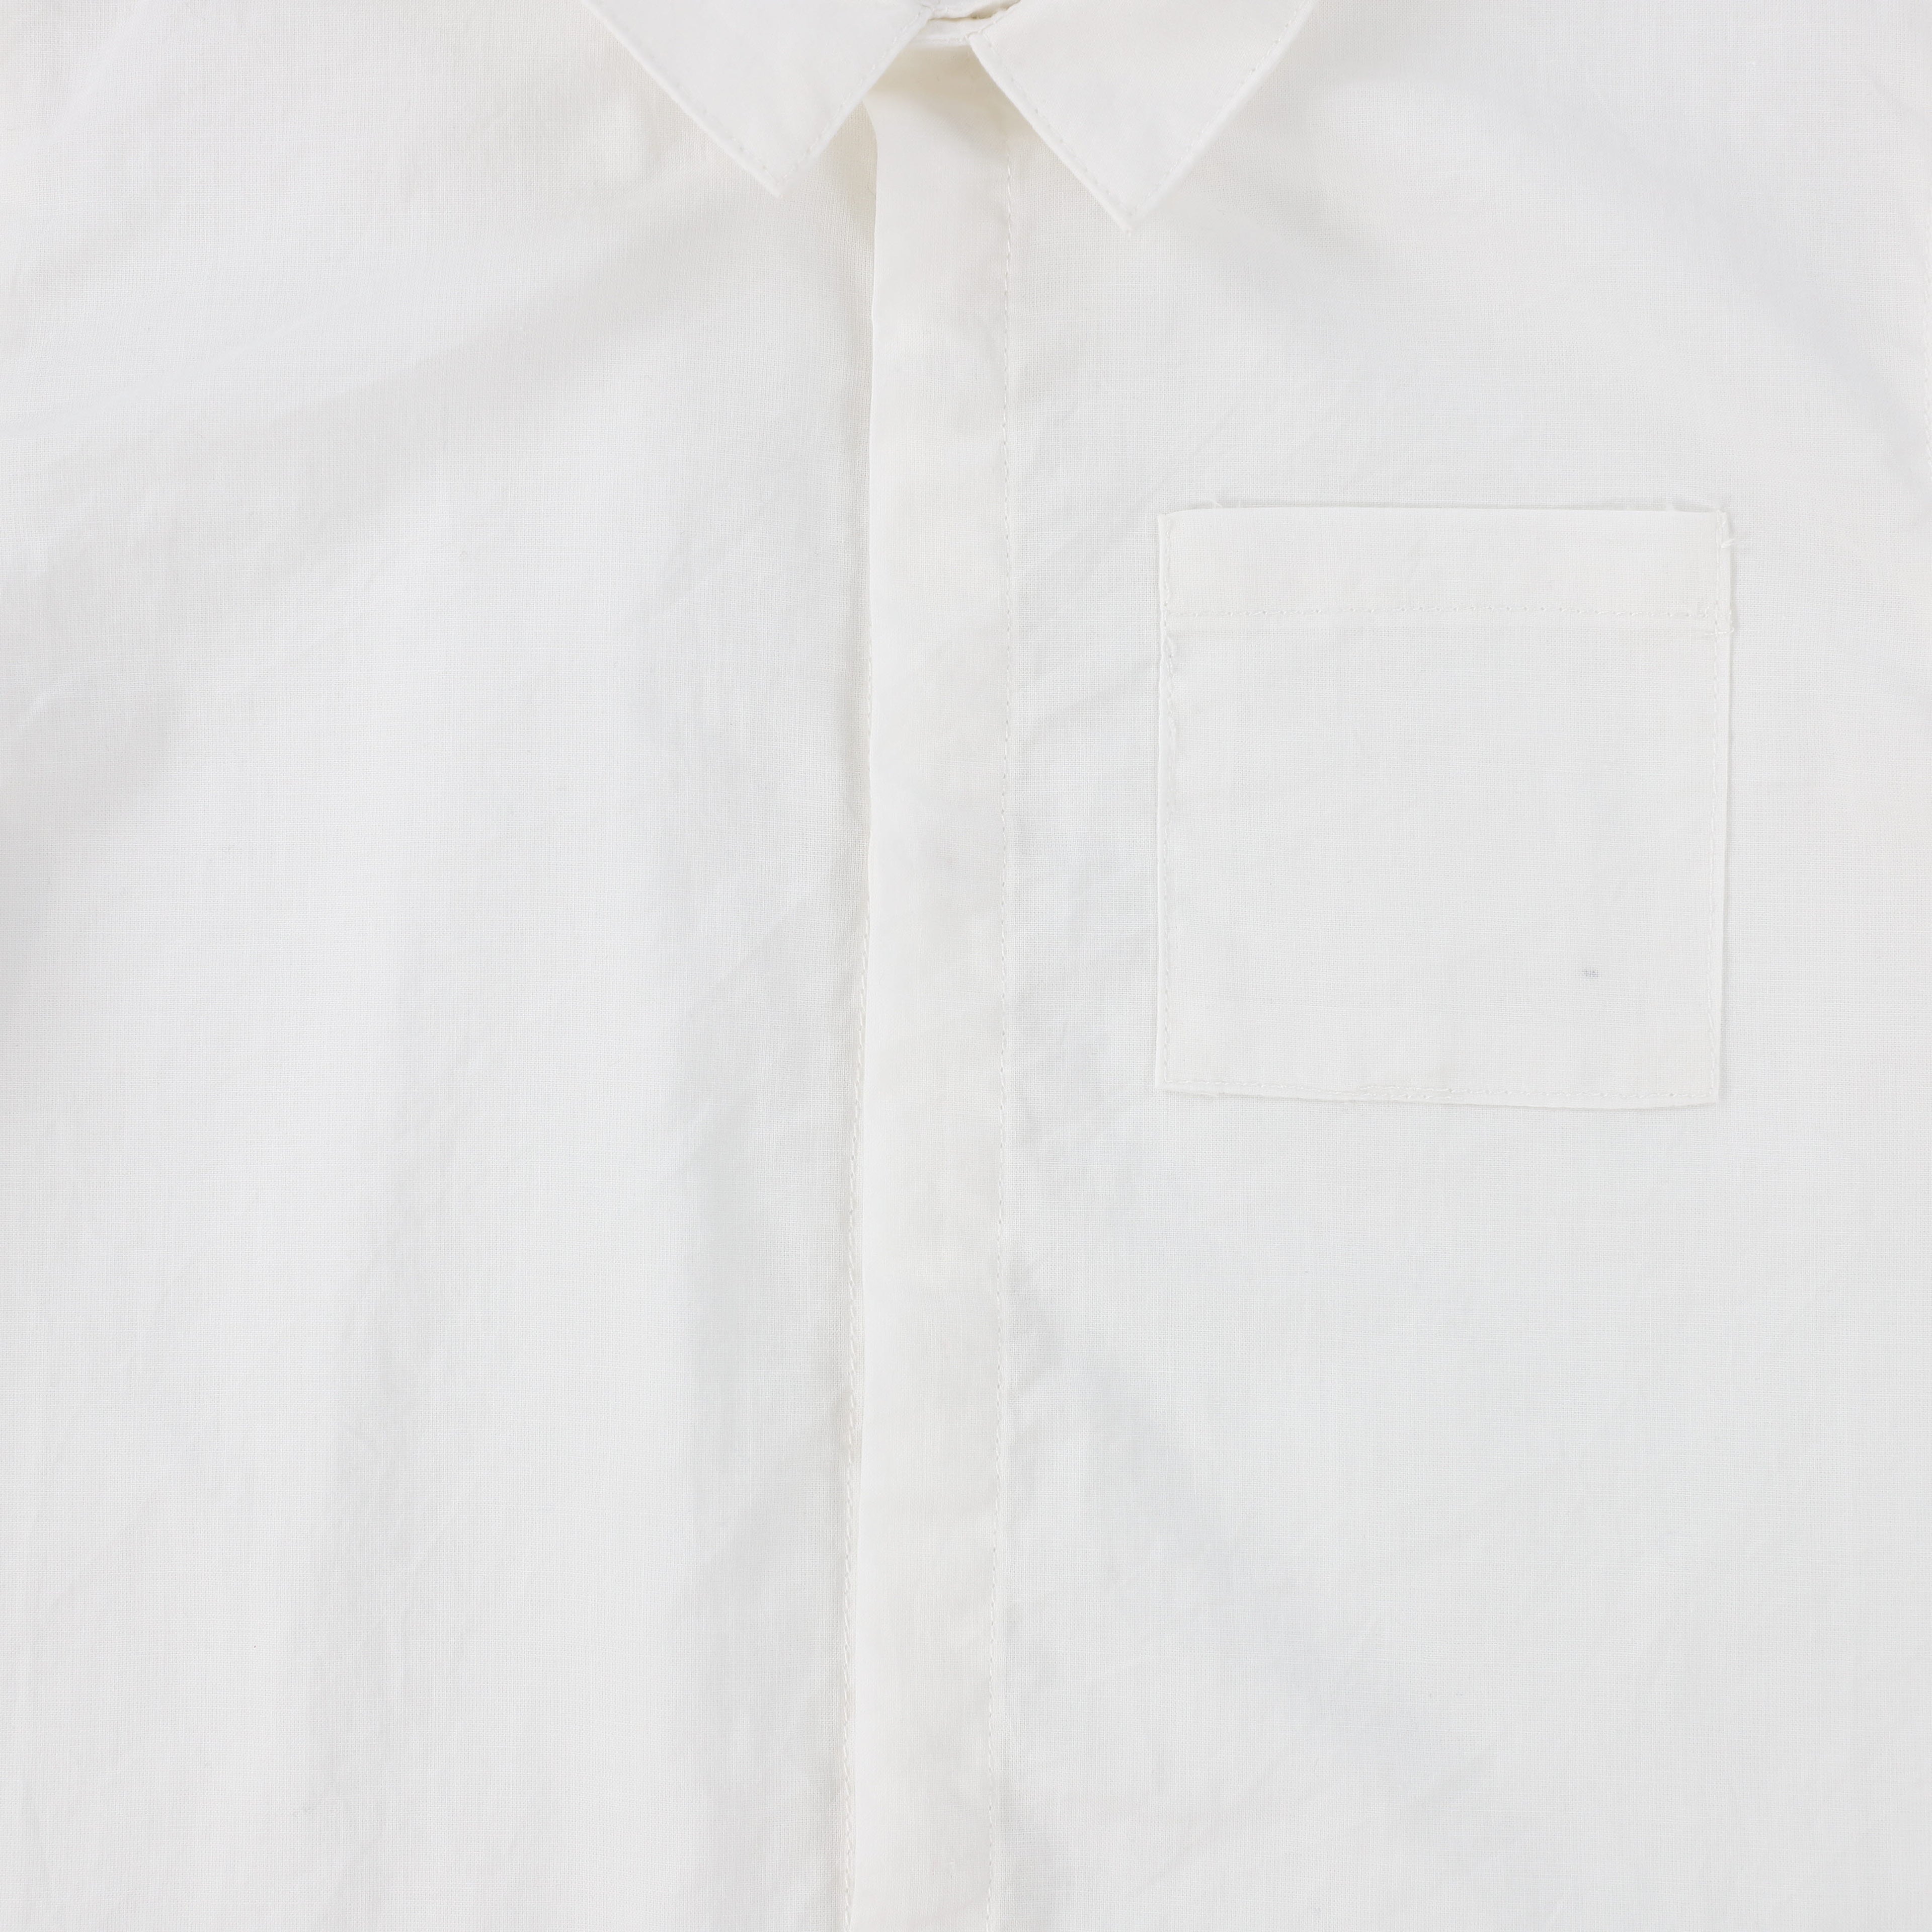 Bamboo White Short Sleeve button Down Shirt